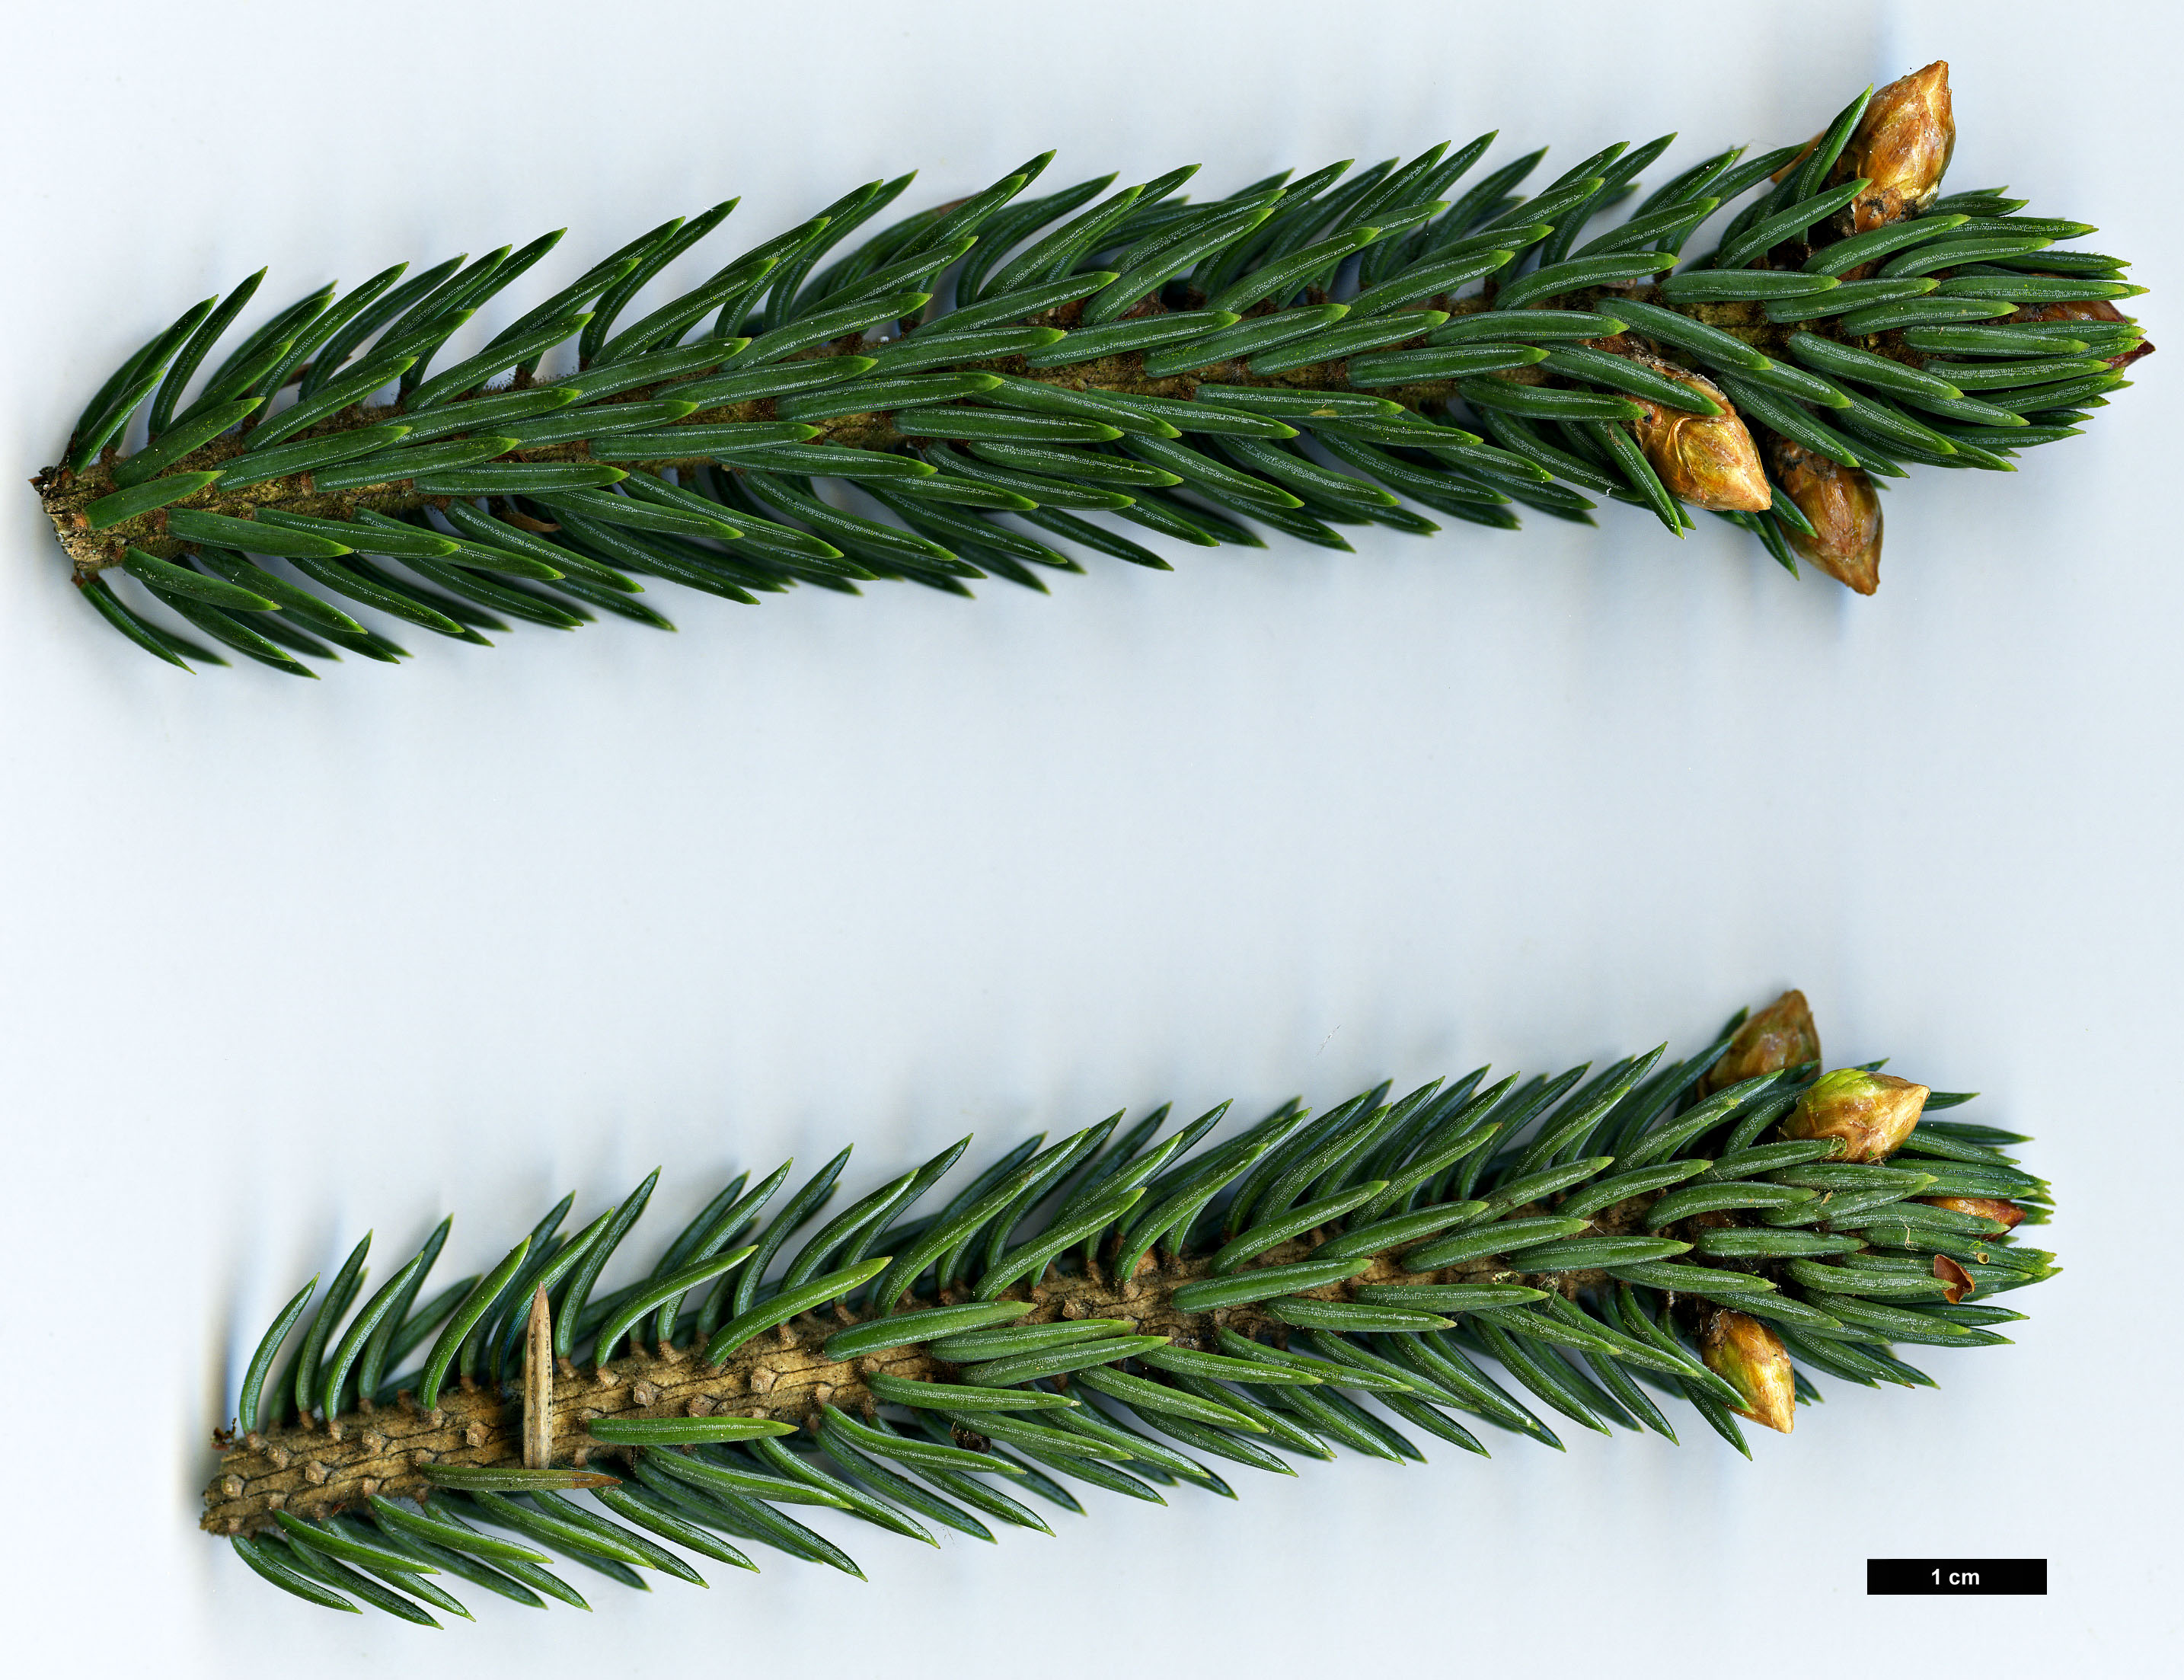 High resolution image: Family: Pinaceae - Genus: Picea - Taxon: likiangensis - SpeciesSub: var. hirtella